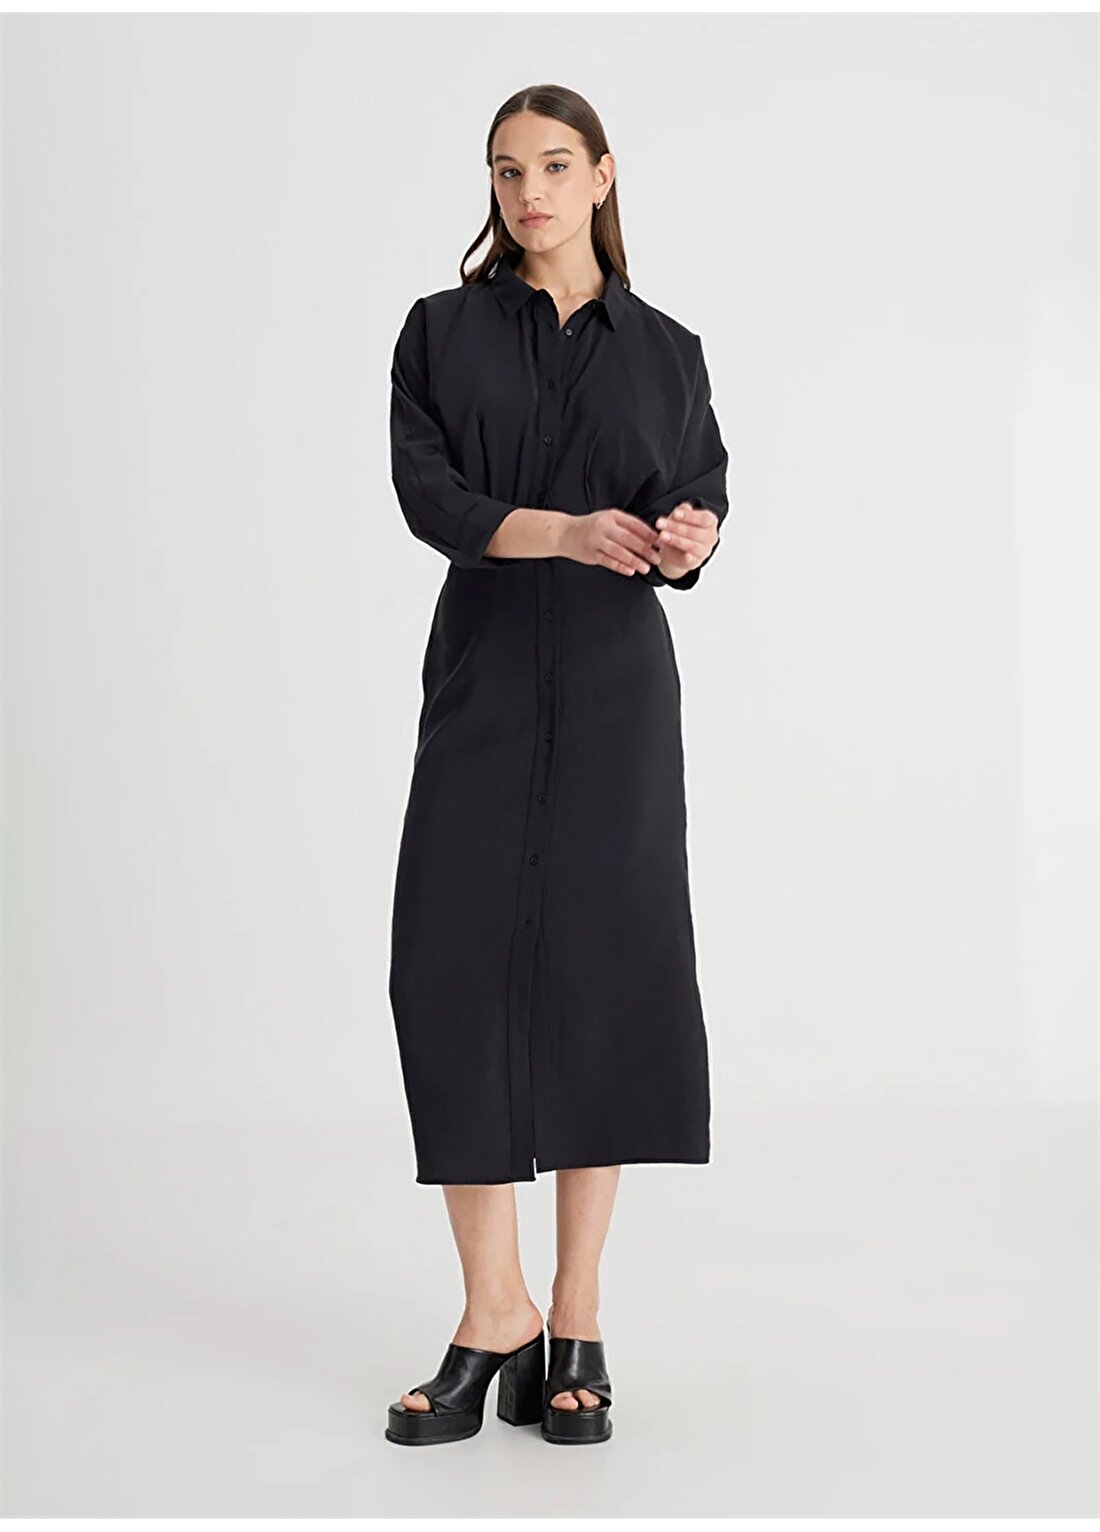 Lee Gömlek Yaka Siyah Standart Kadın Elbise L241612001-Gömlek Elbise